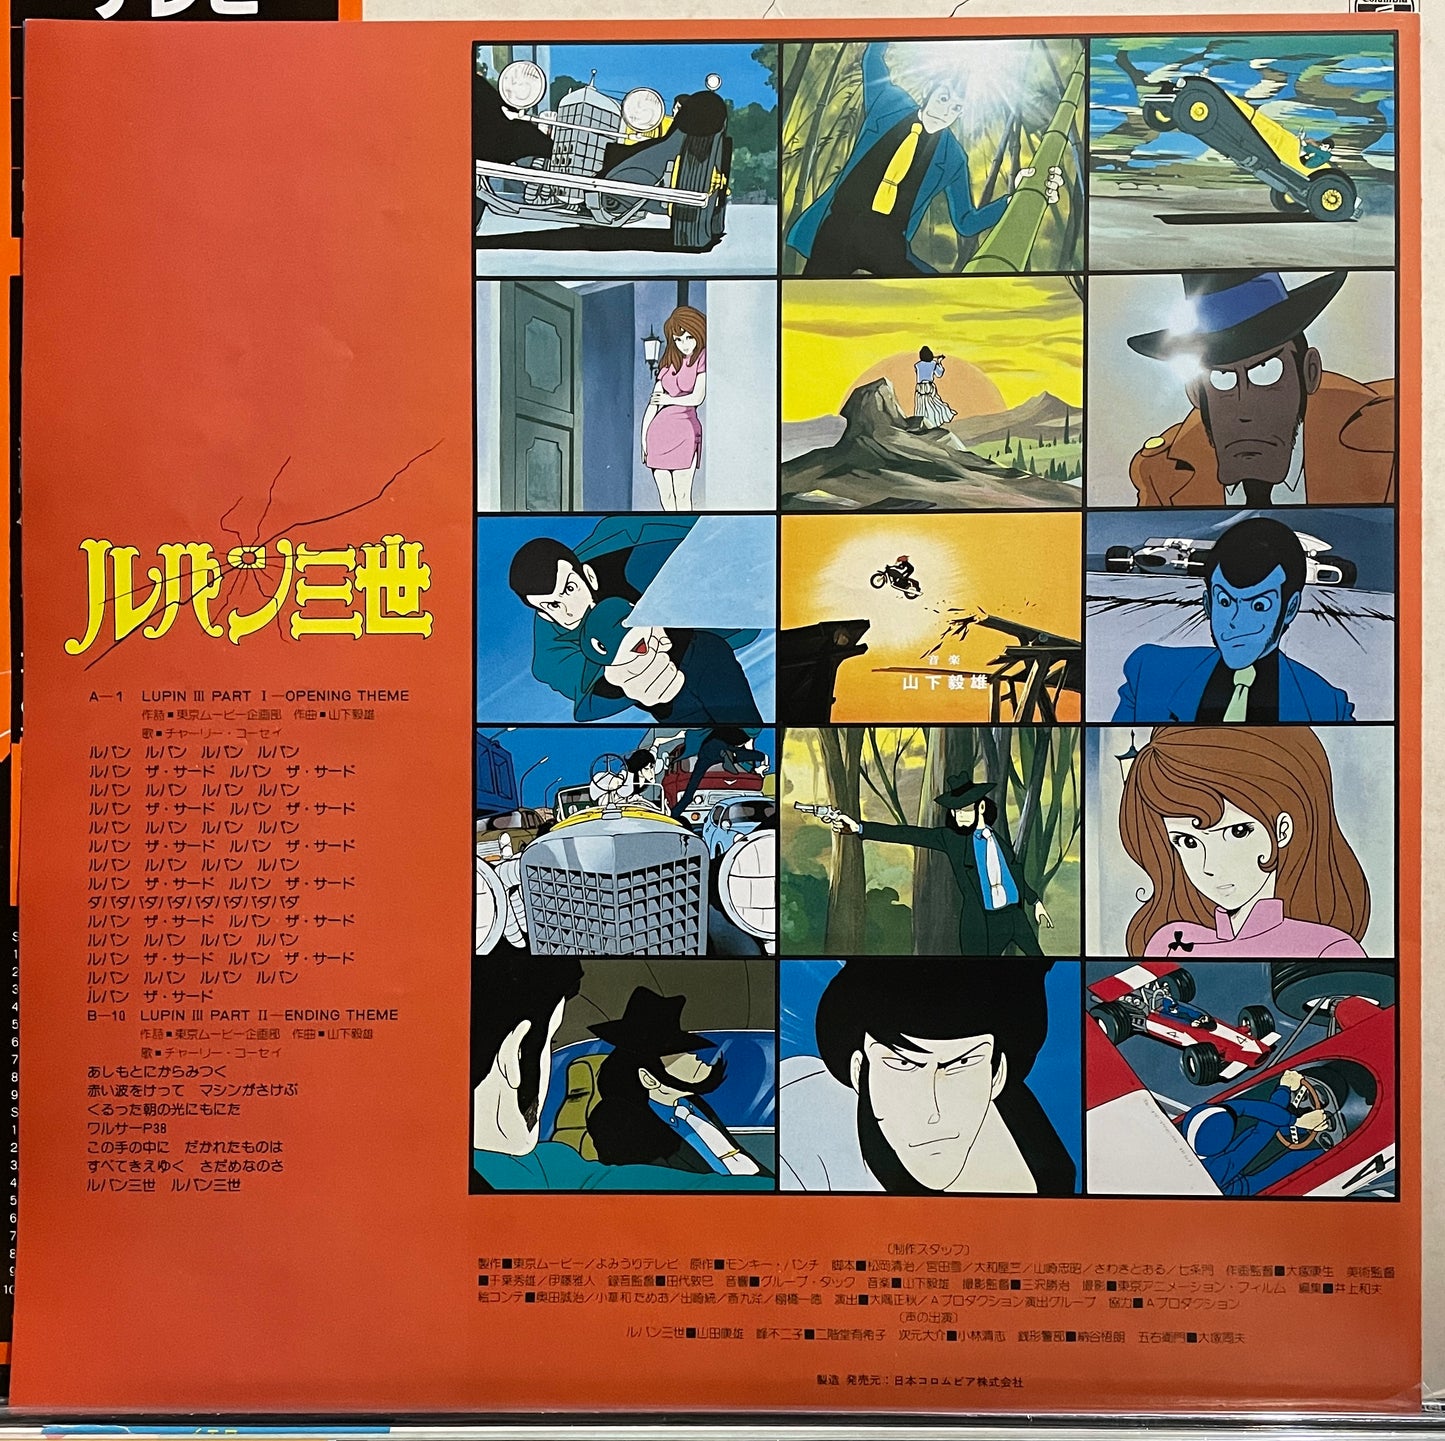 Takeo Yamashita “Lupin The 3rd BGM” (1980)